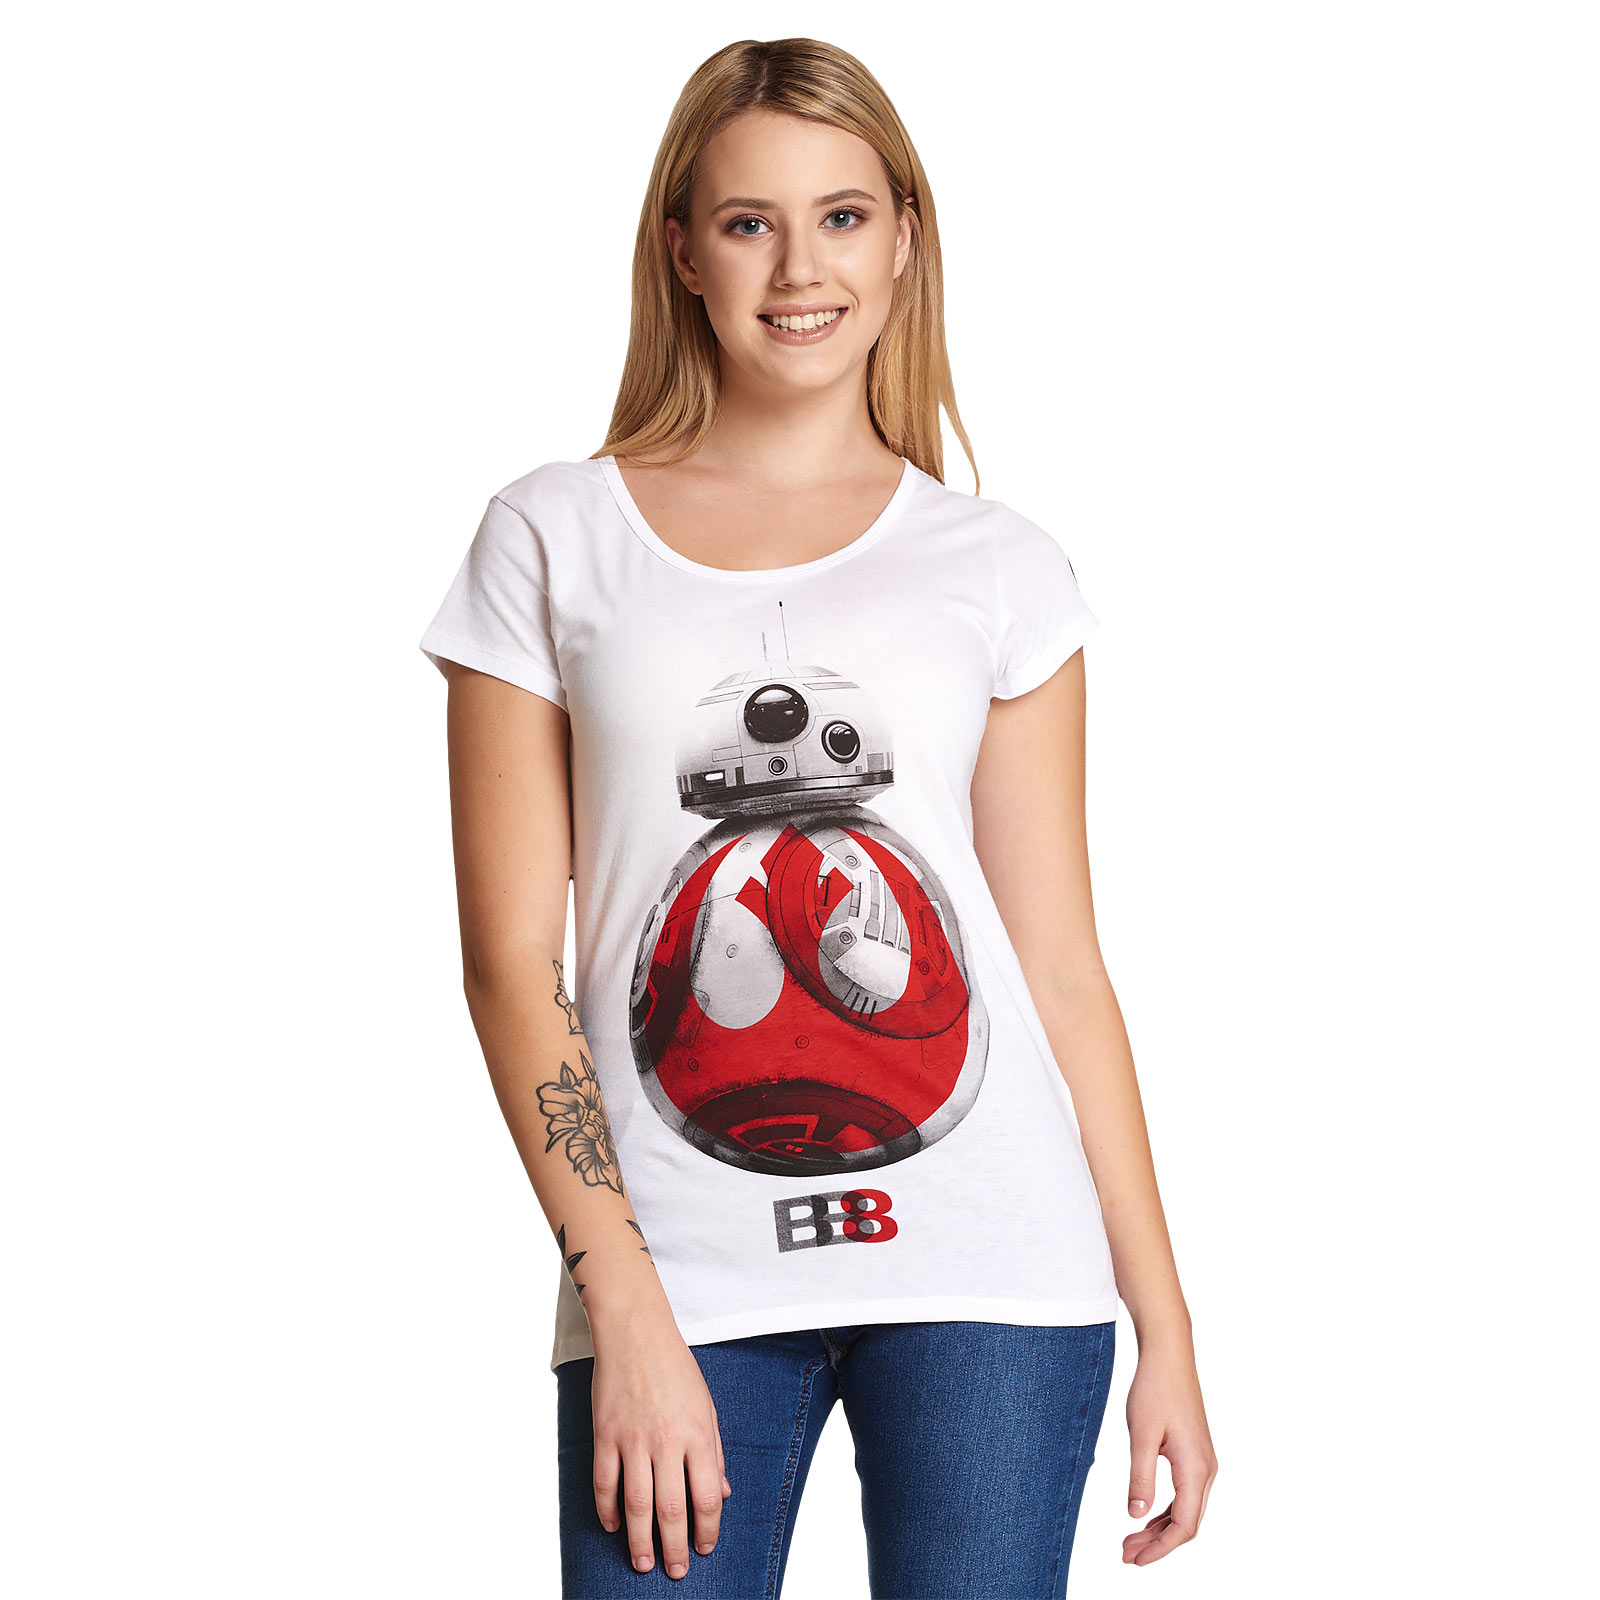 Star Wars - Rebel BB-8 dames T-shirt wit